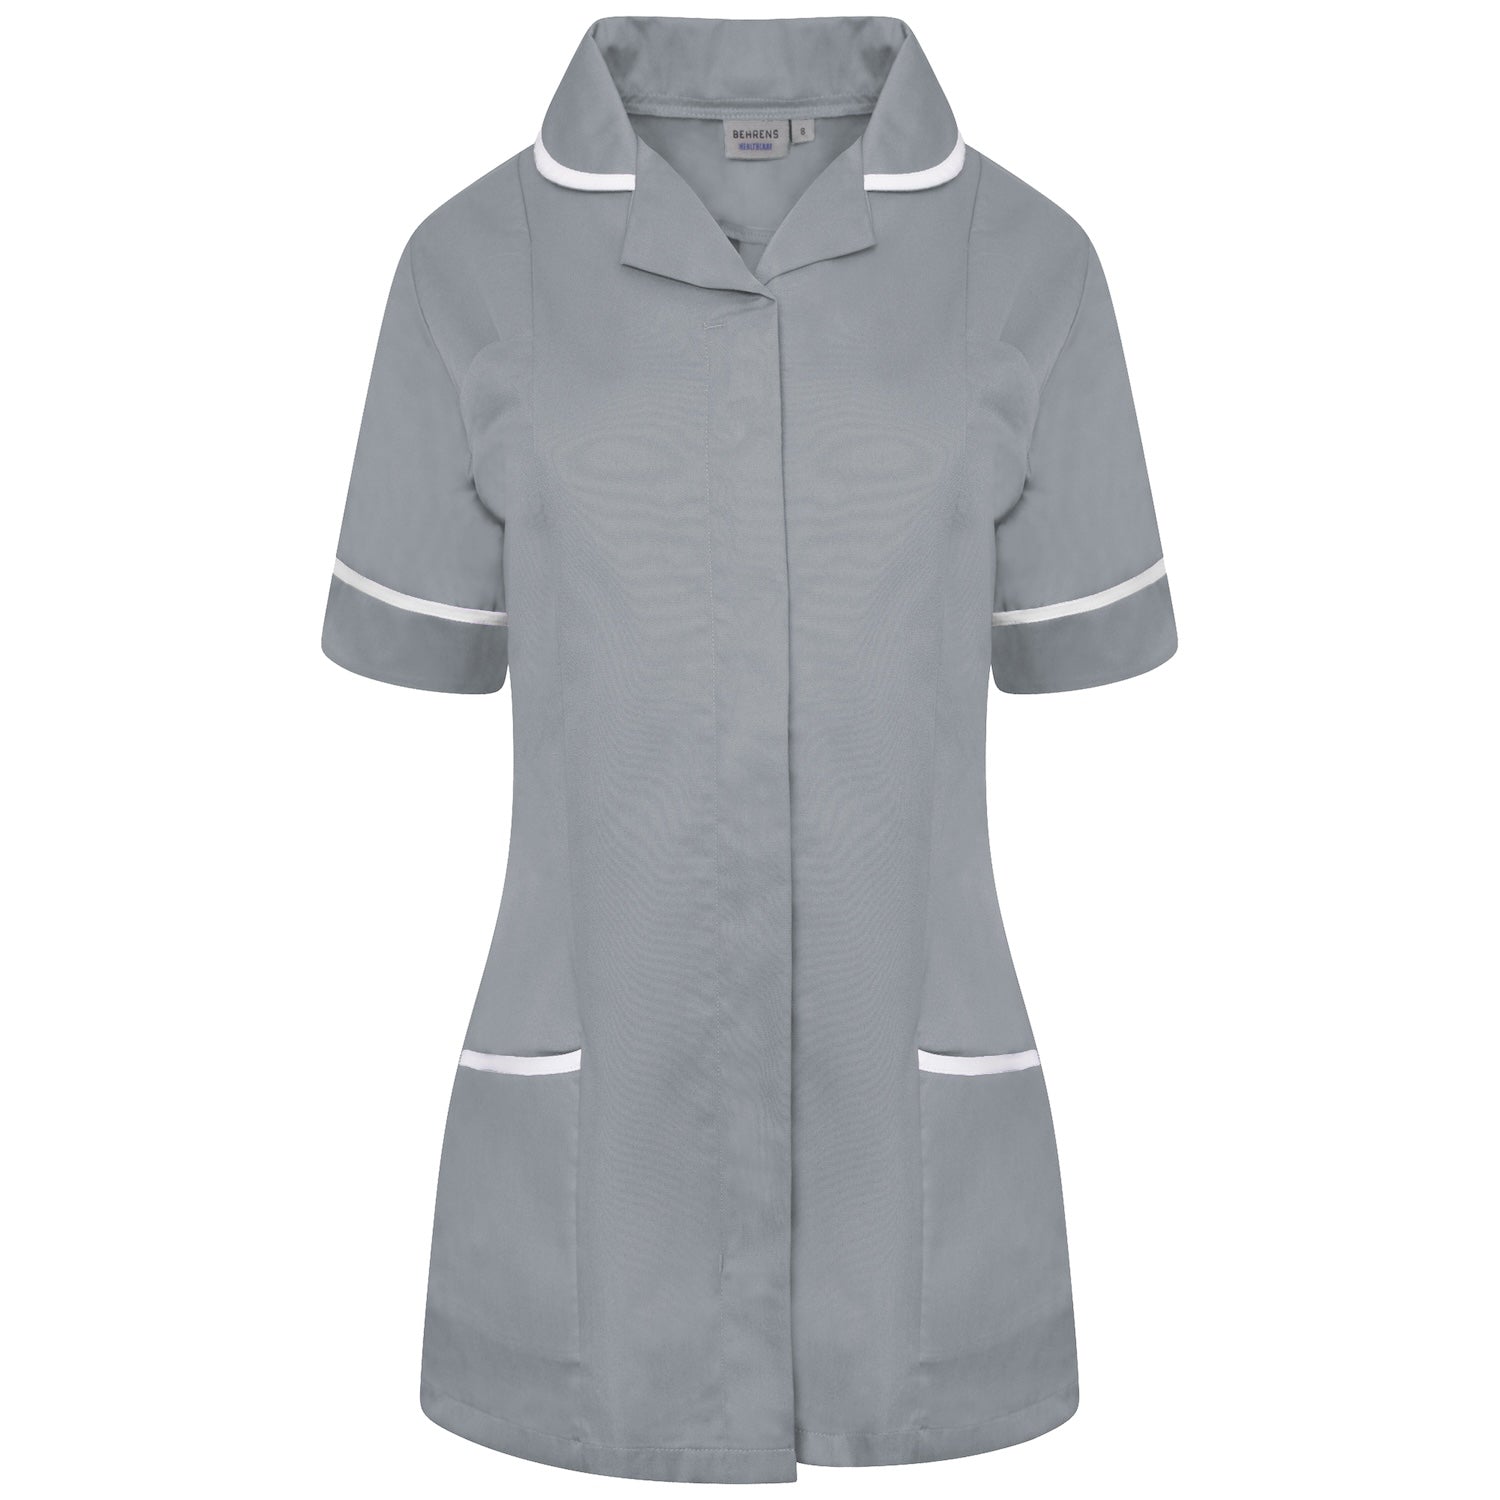 Ladies Healthcare Tunic | Round Collar | Grey/White Trim